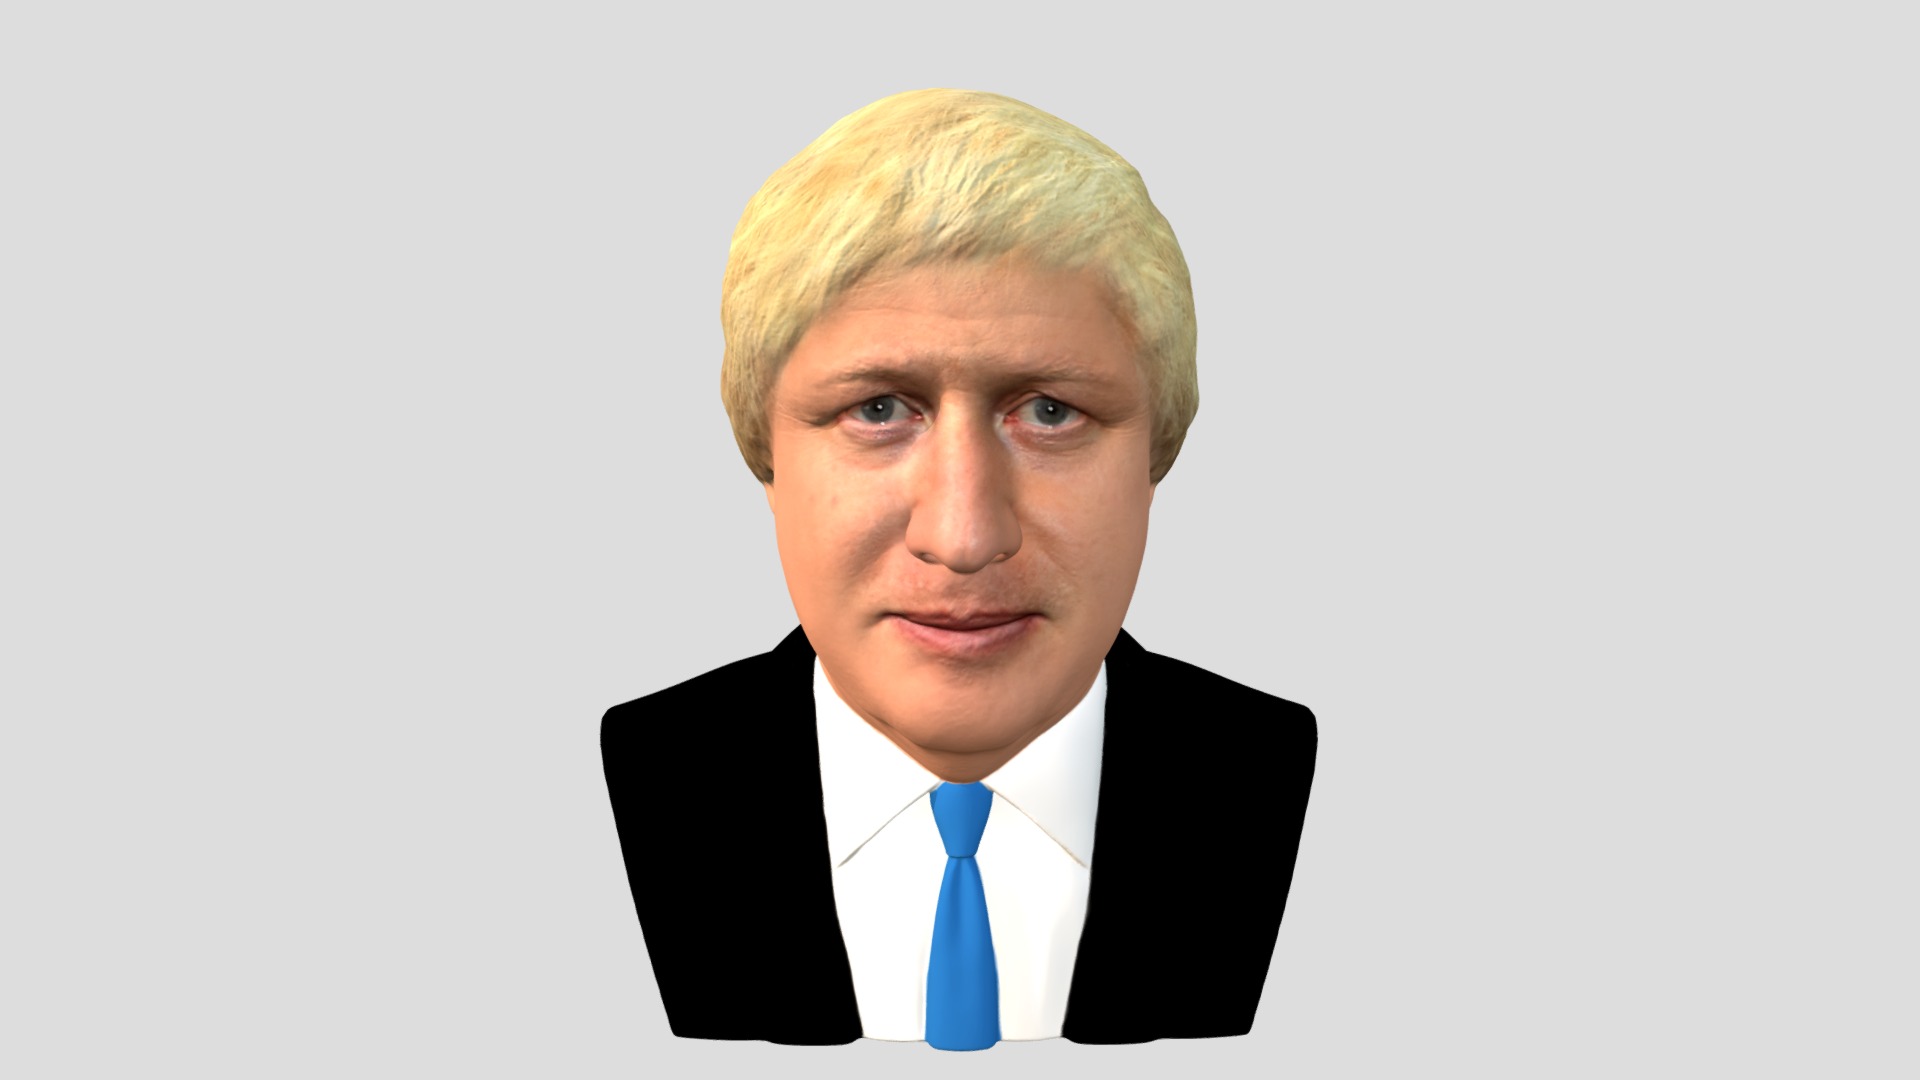 3D model Boris Johnson bust for full color 3D printing - This is a 3D model of the Boris Johnson bust for full color 3D printing. The 3D model is about a man in a suit.